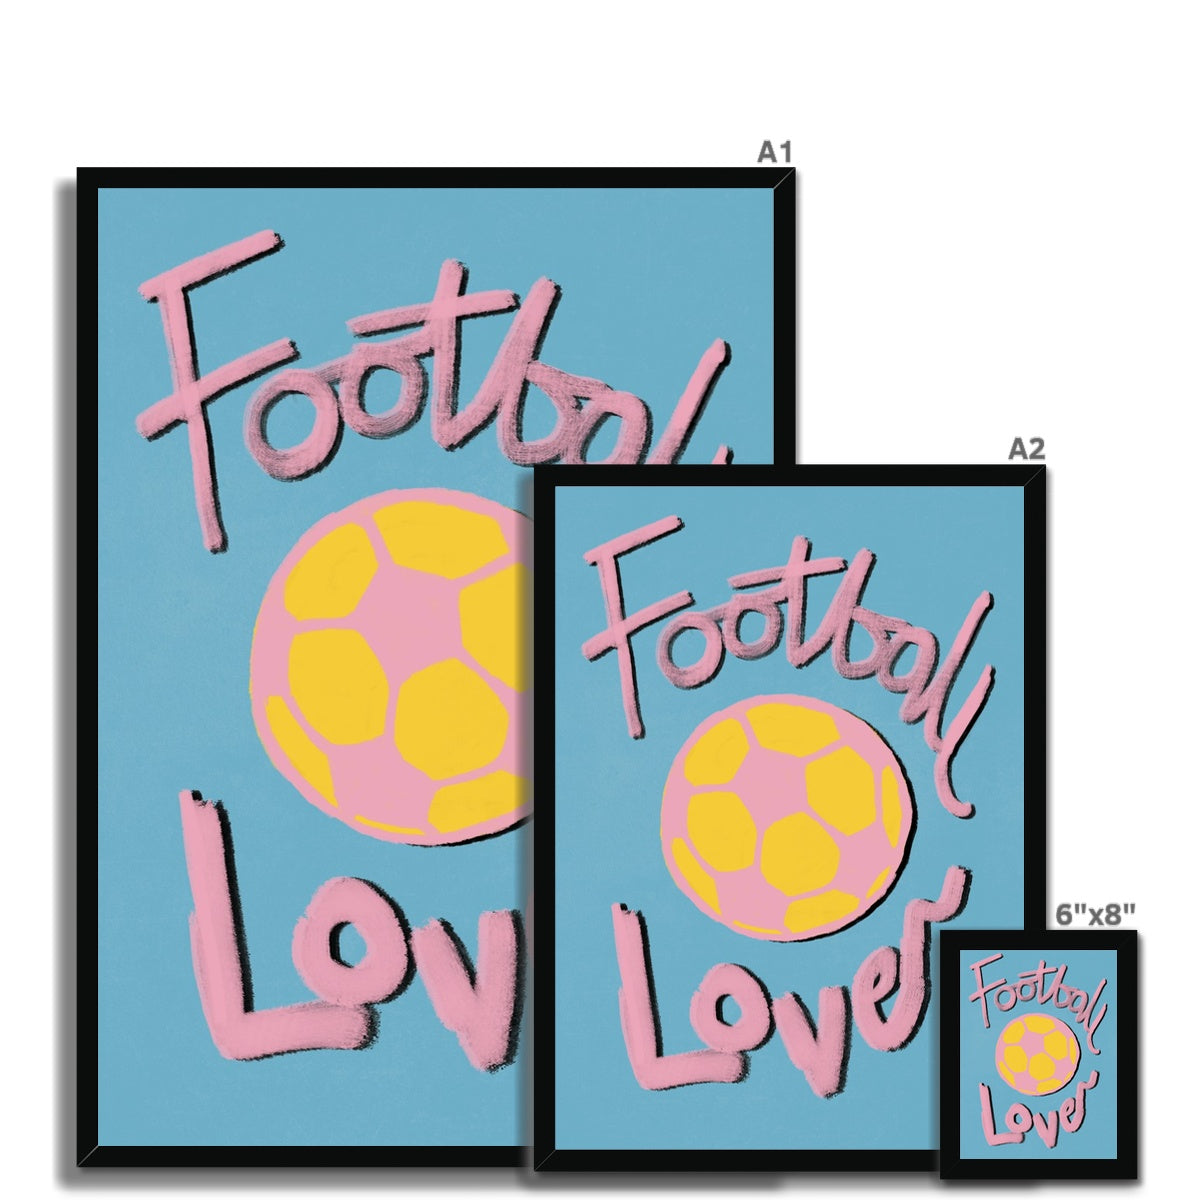 Football Lover Print - Blue, Yellow, Pink Framed Print